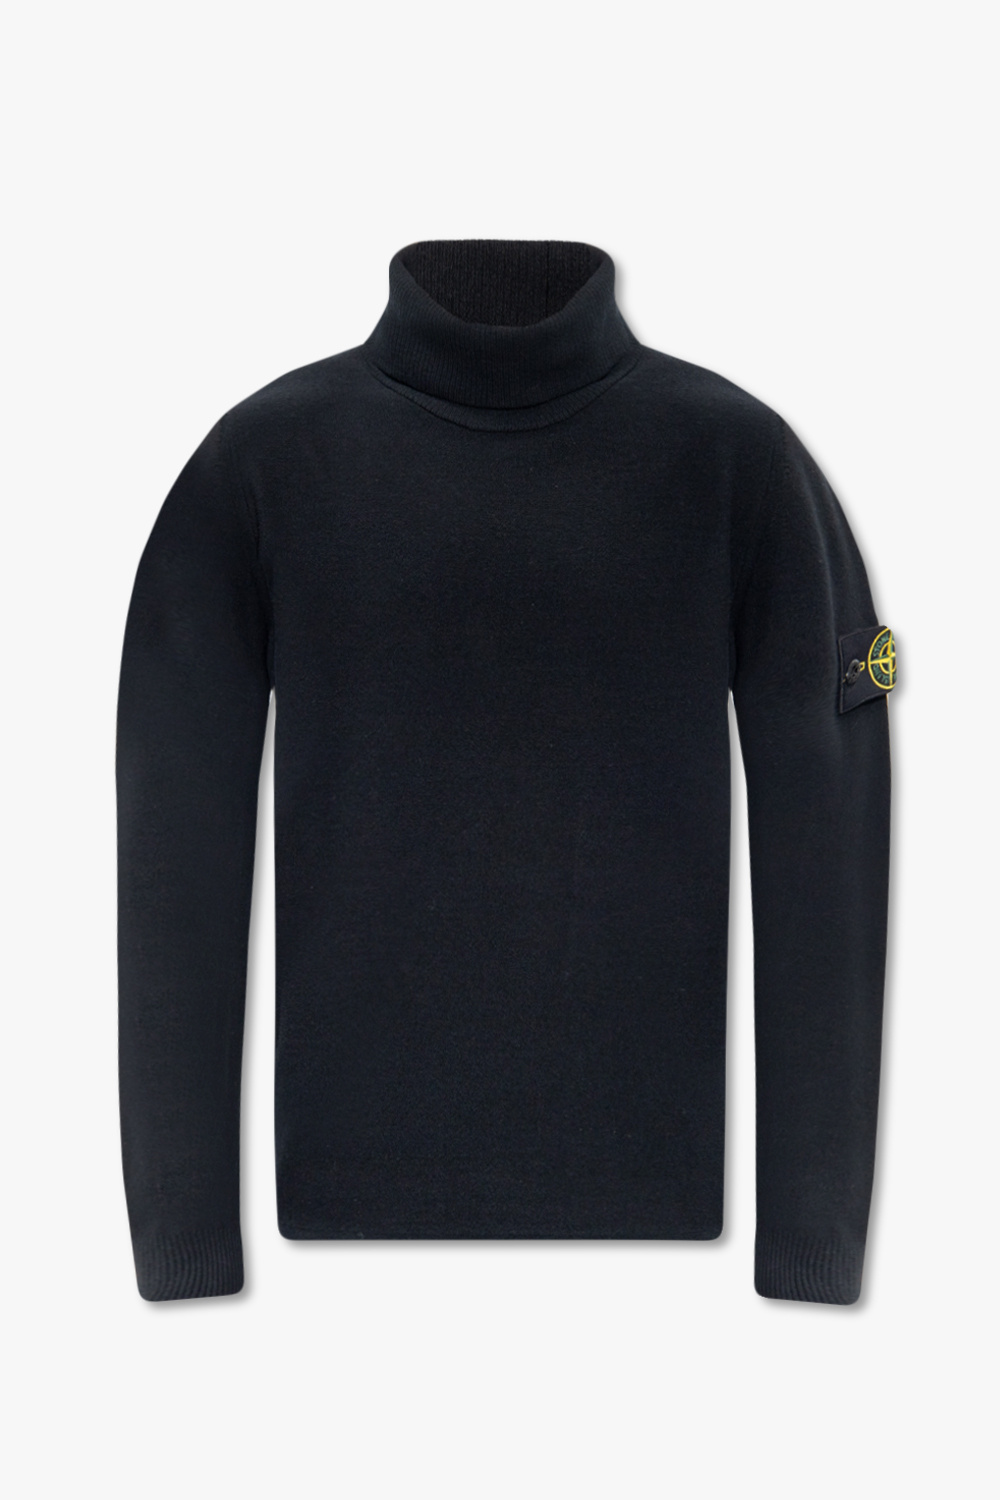 Stone Island Turtleneck boody sweater with logo